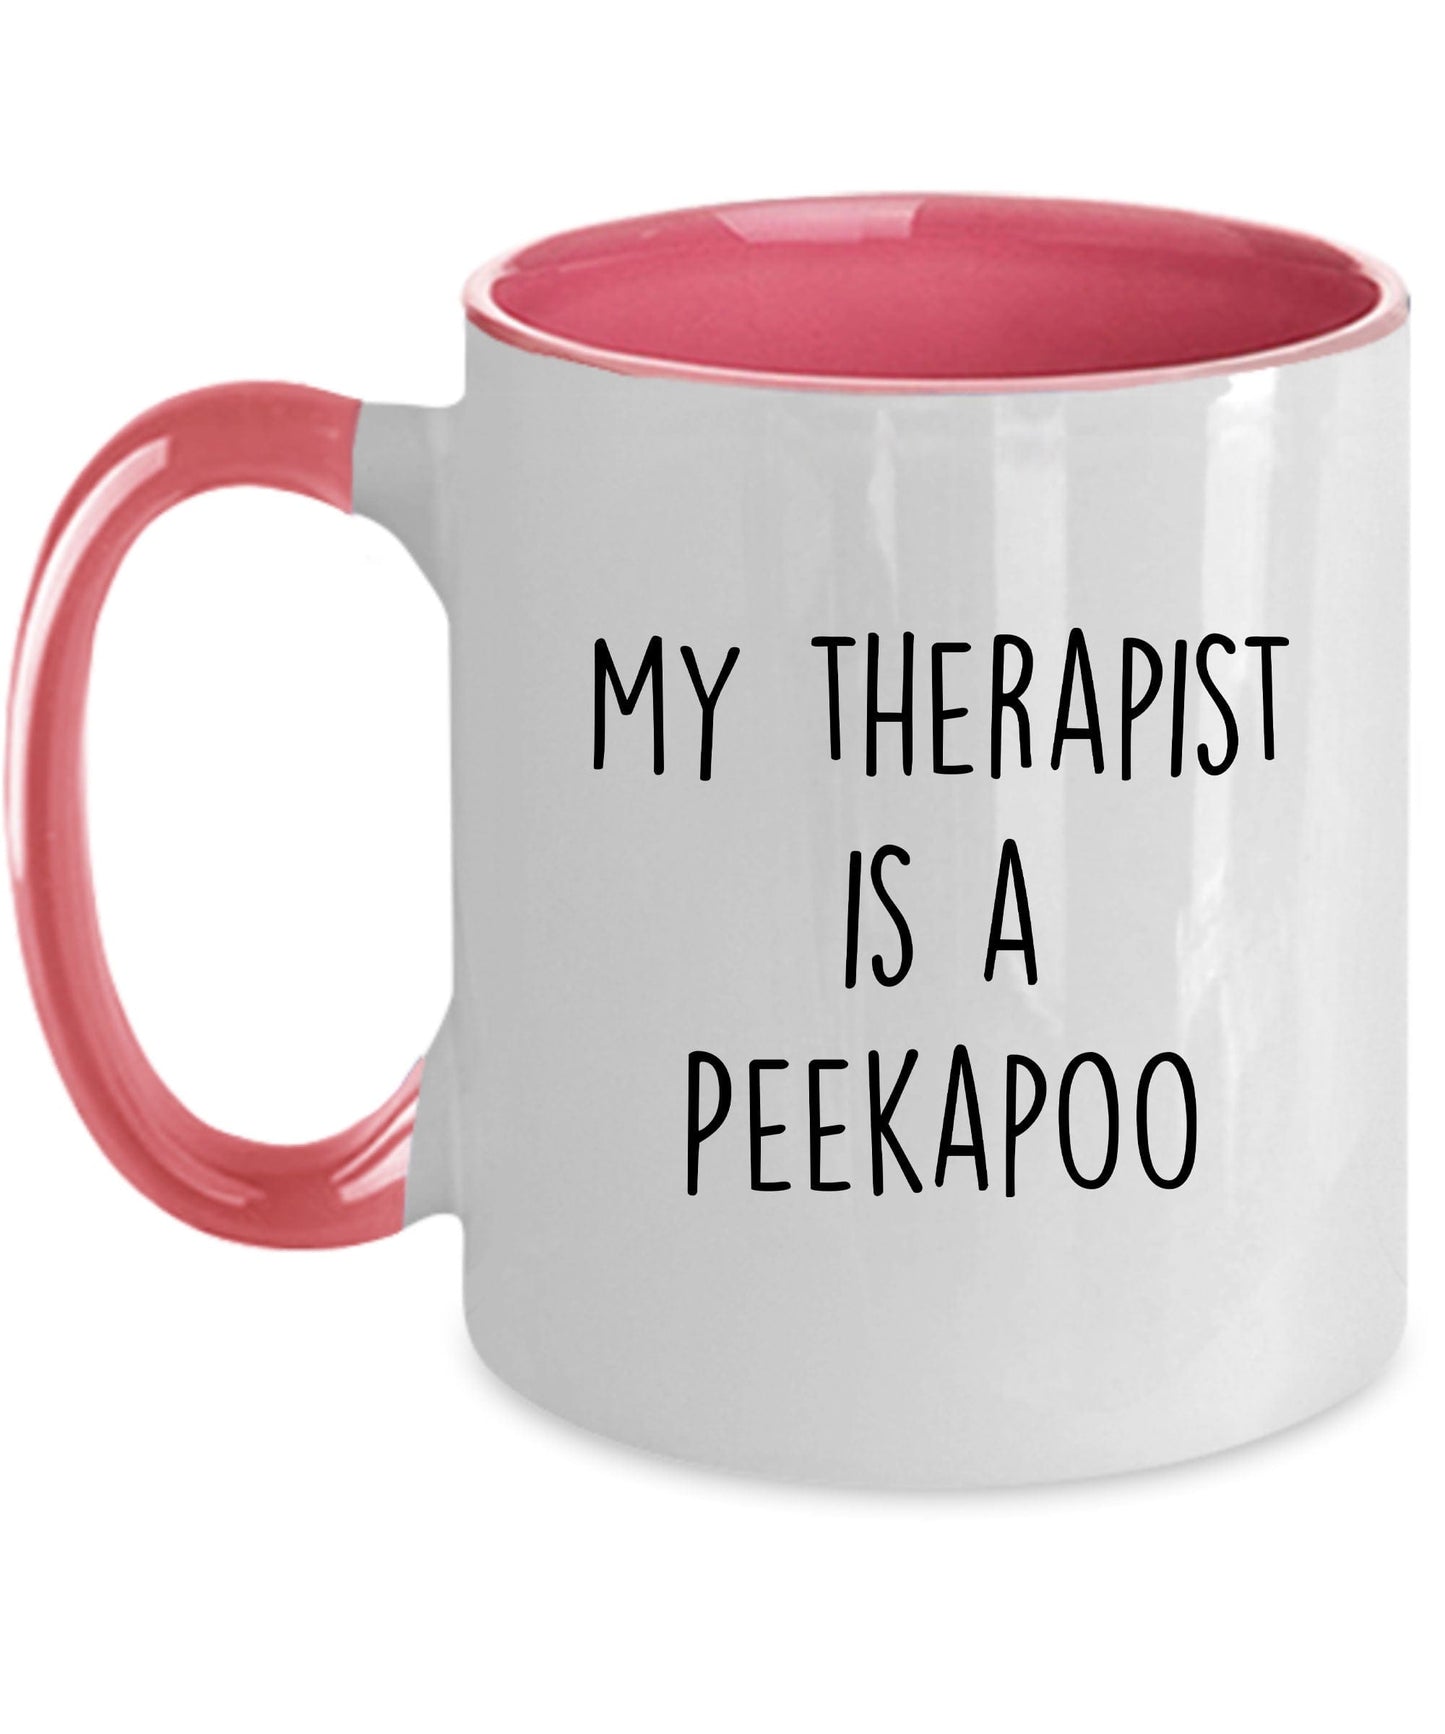 Peekapoo funny dog coffee mug - My Therapist is a Peekapoo